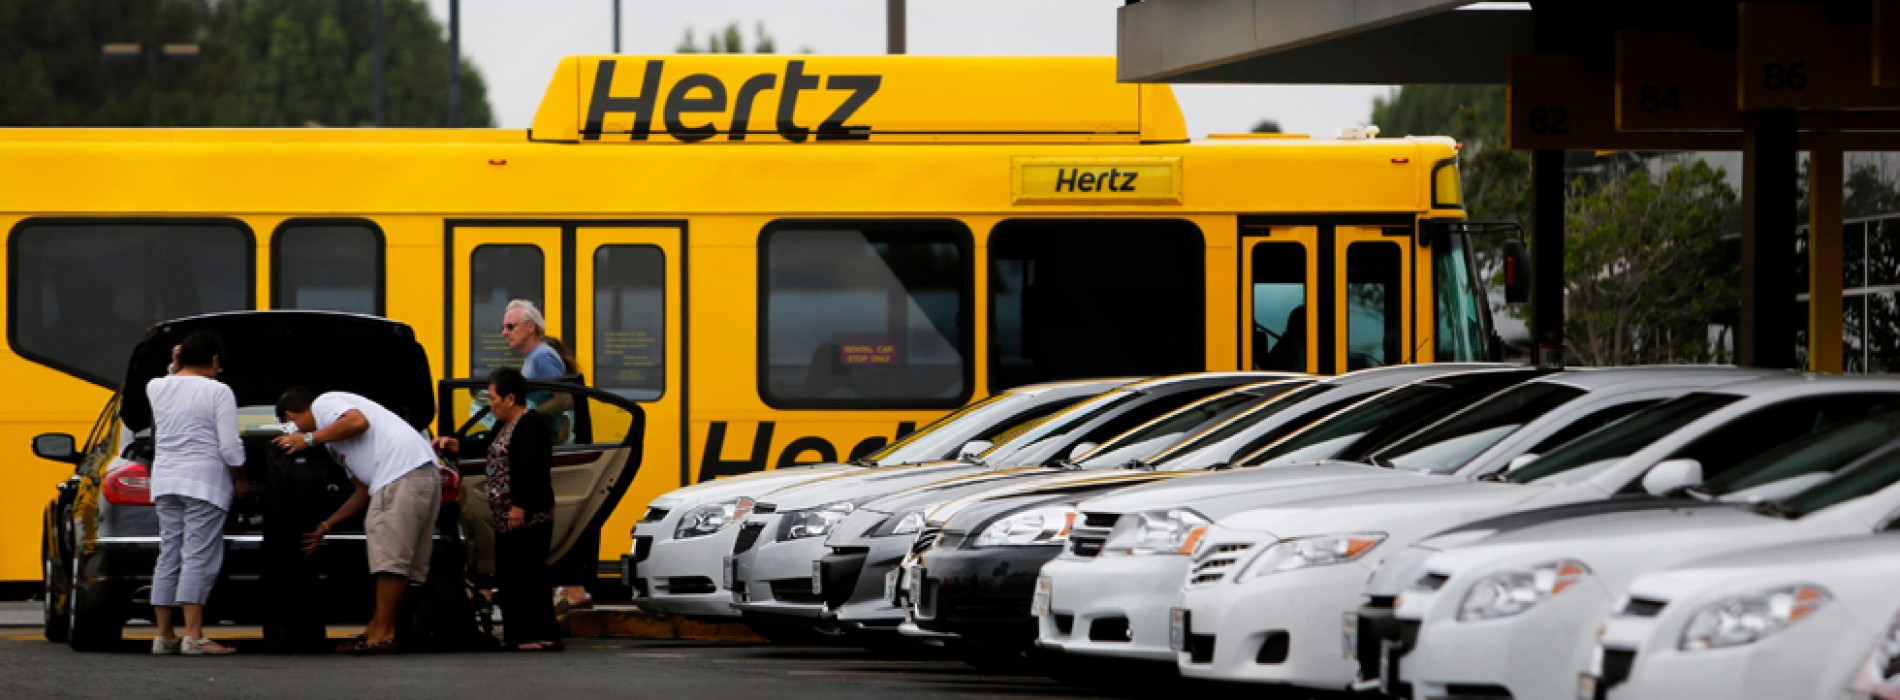 Hertz worldwide car rental inventory available through